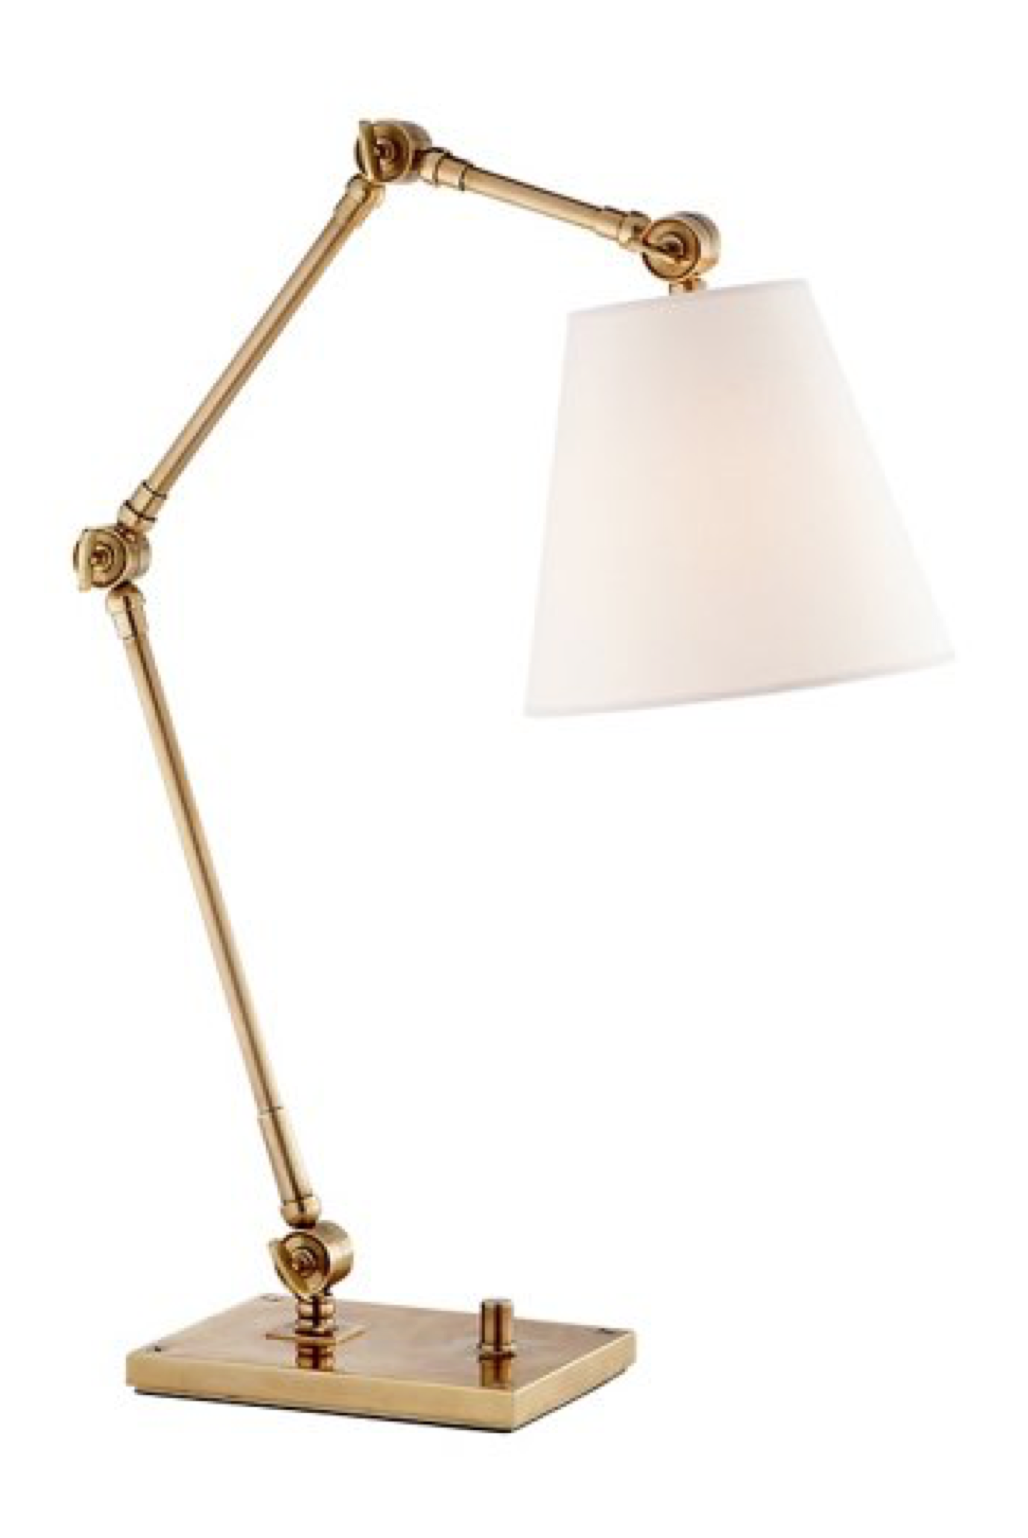 Antiqued Brass Lamp